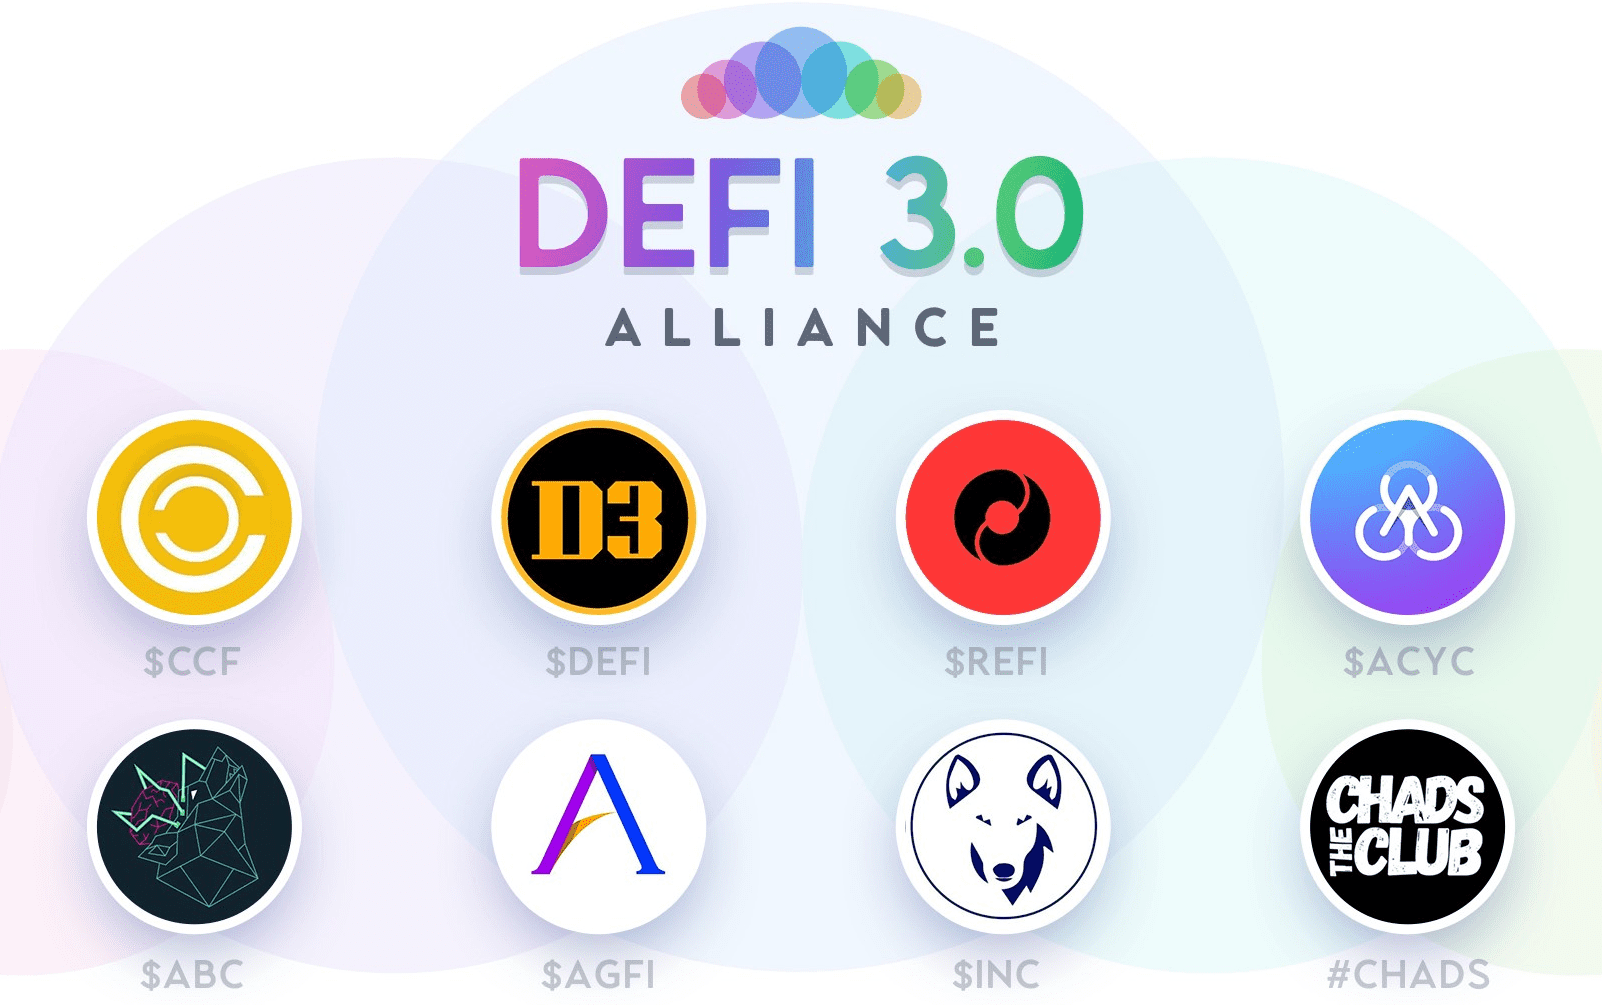 DeFi 3.0 Alliance